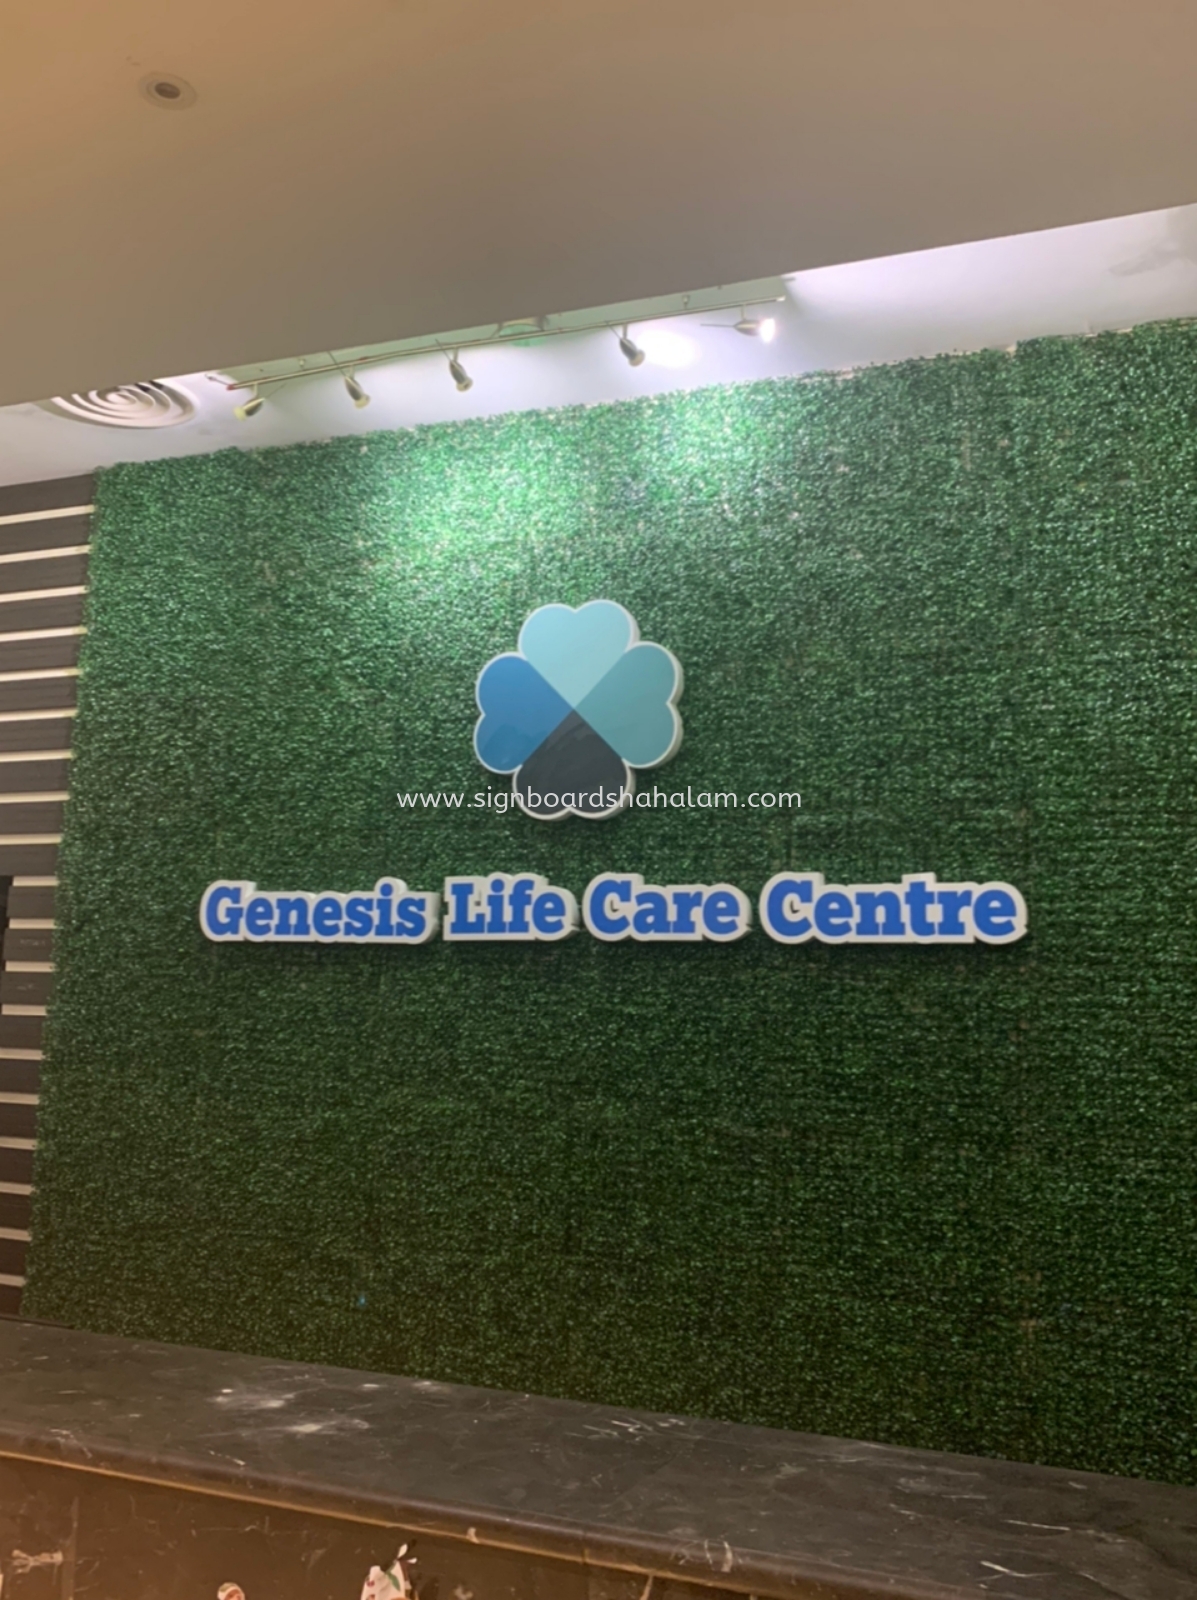 Genesis Life Care Centre Klang - 3D Channel Signboard 